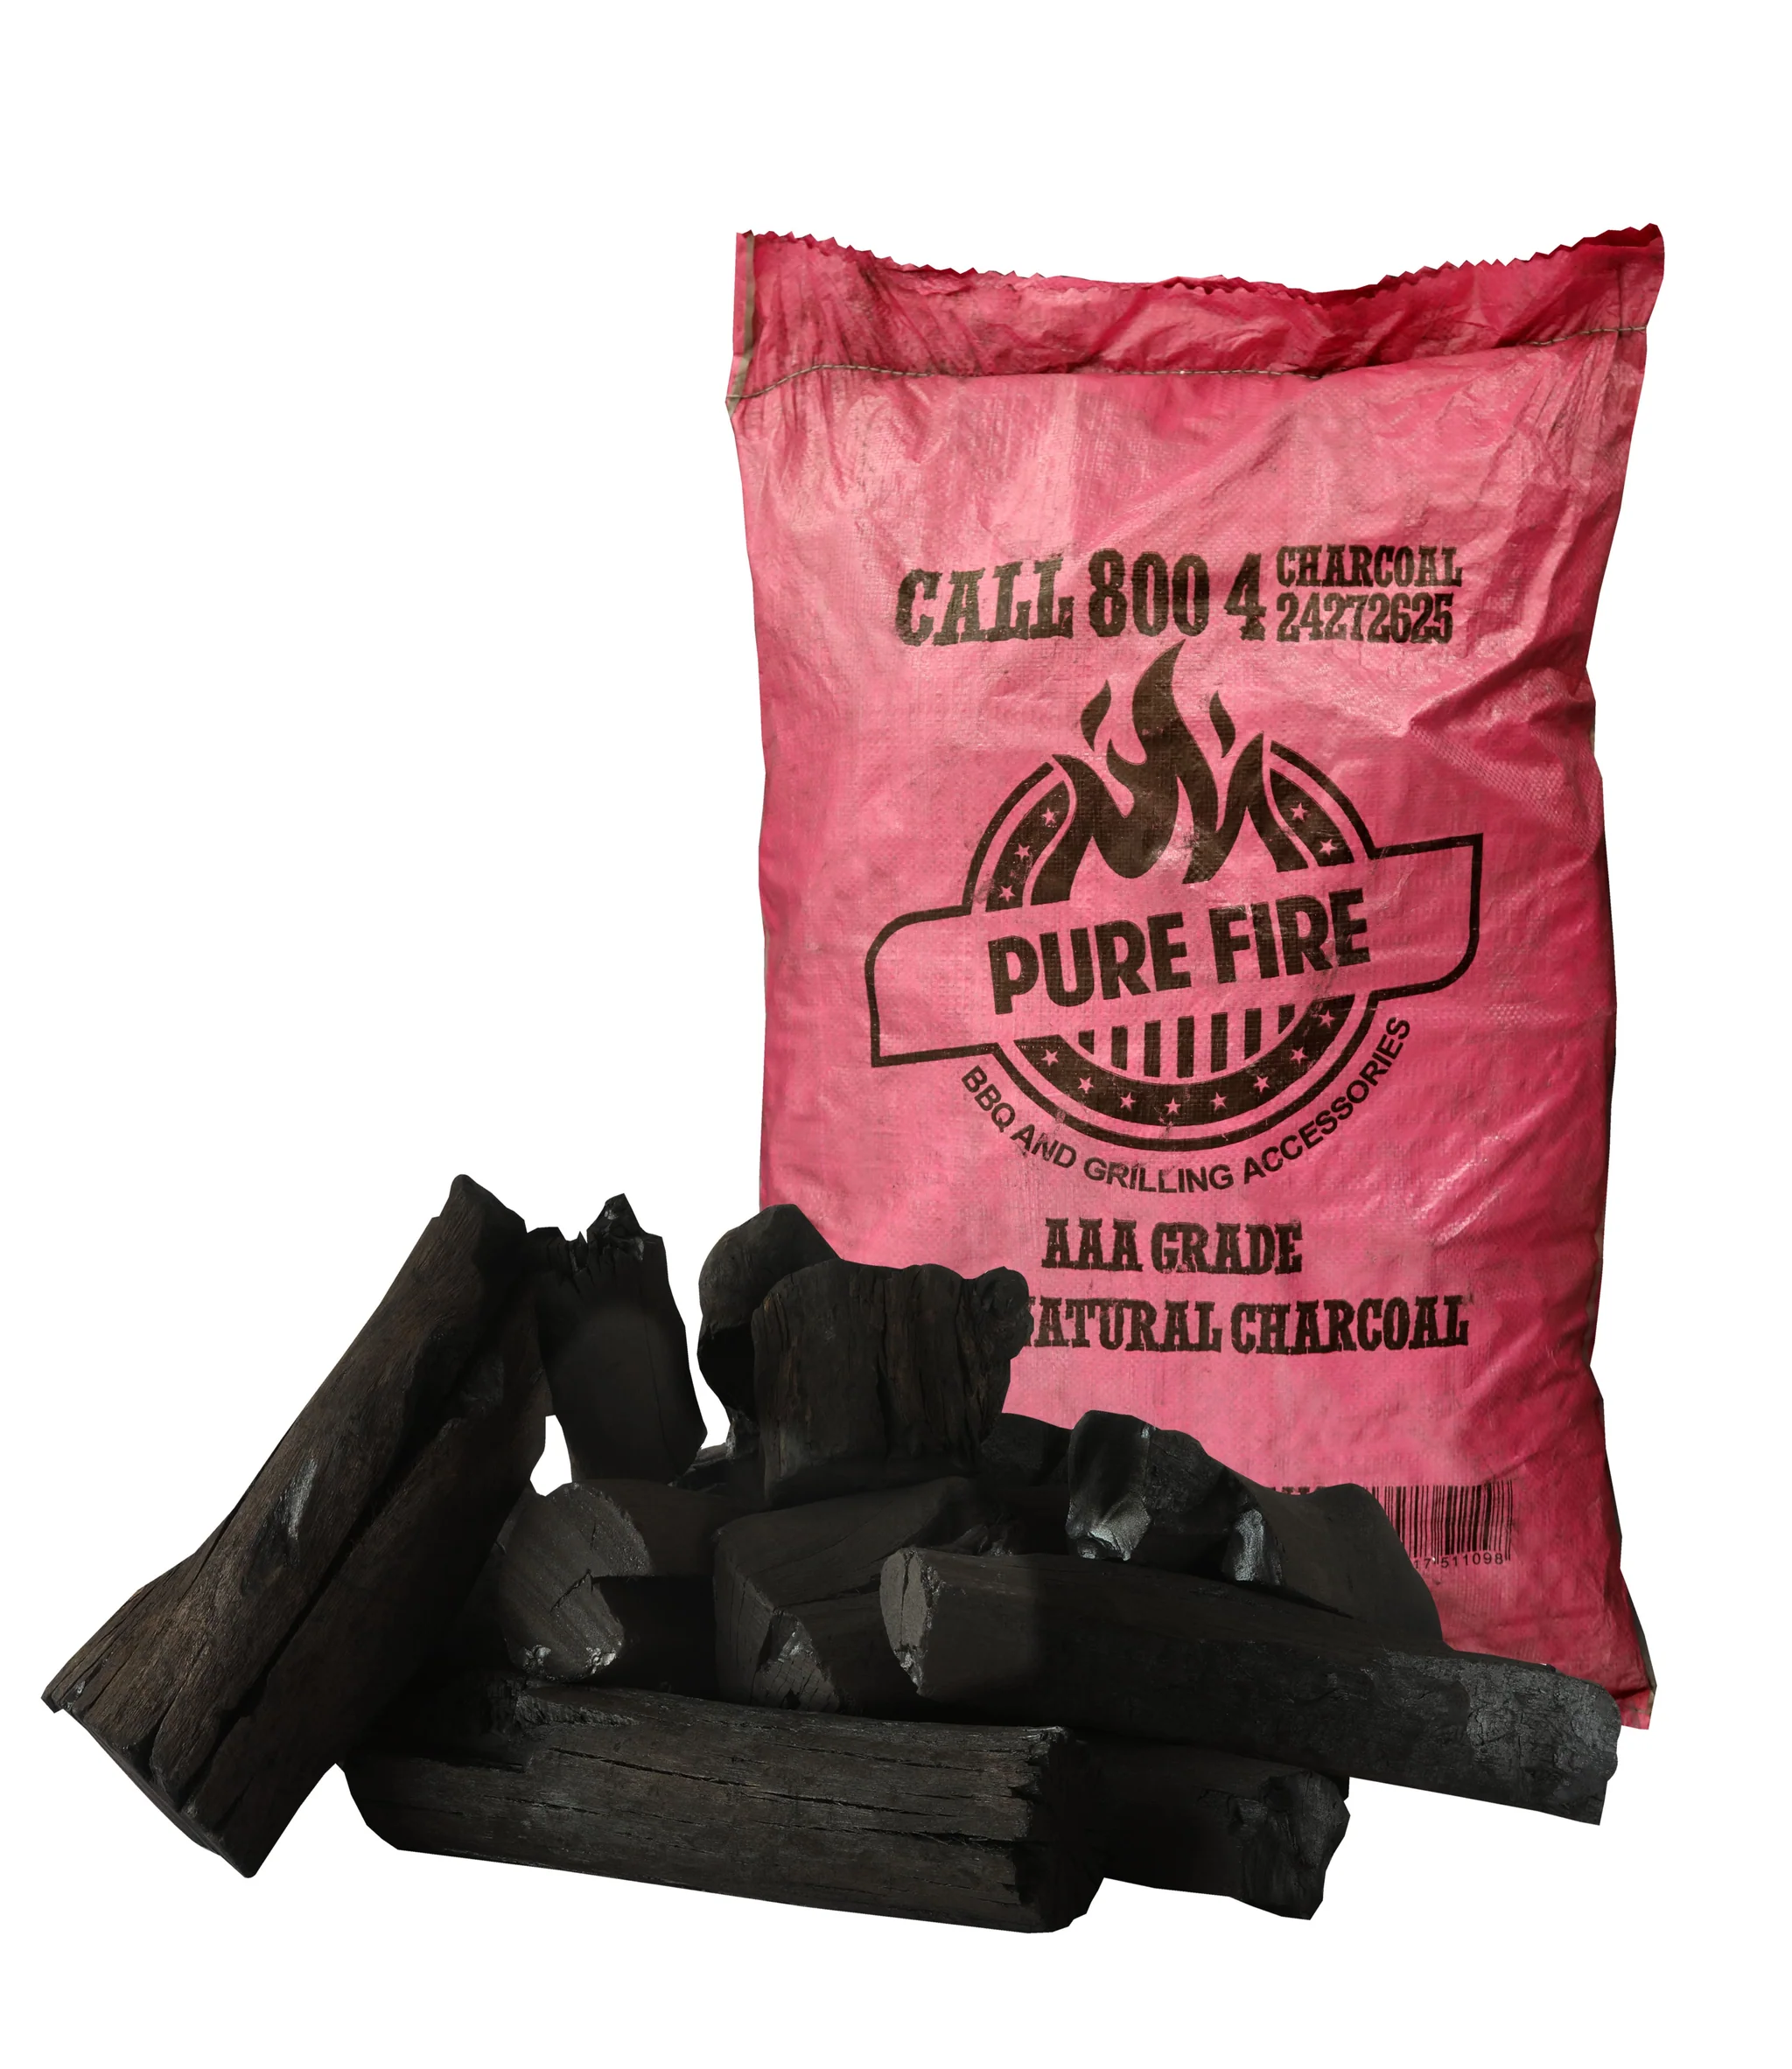 aaa-grade-natural-charcoal-10kg-pink-bag-566629_2048x